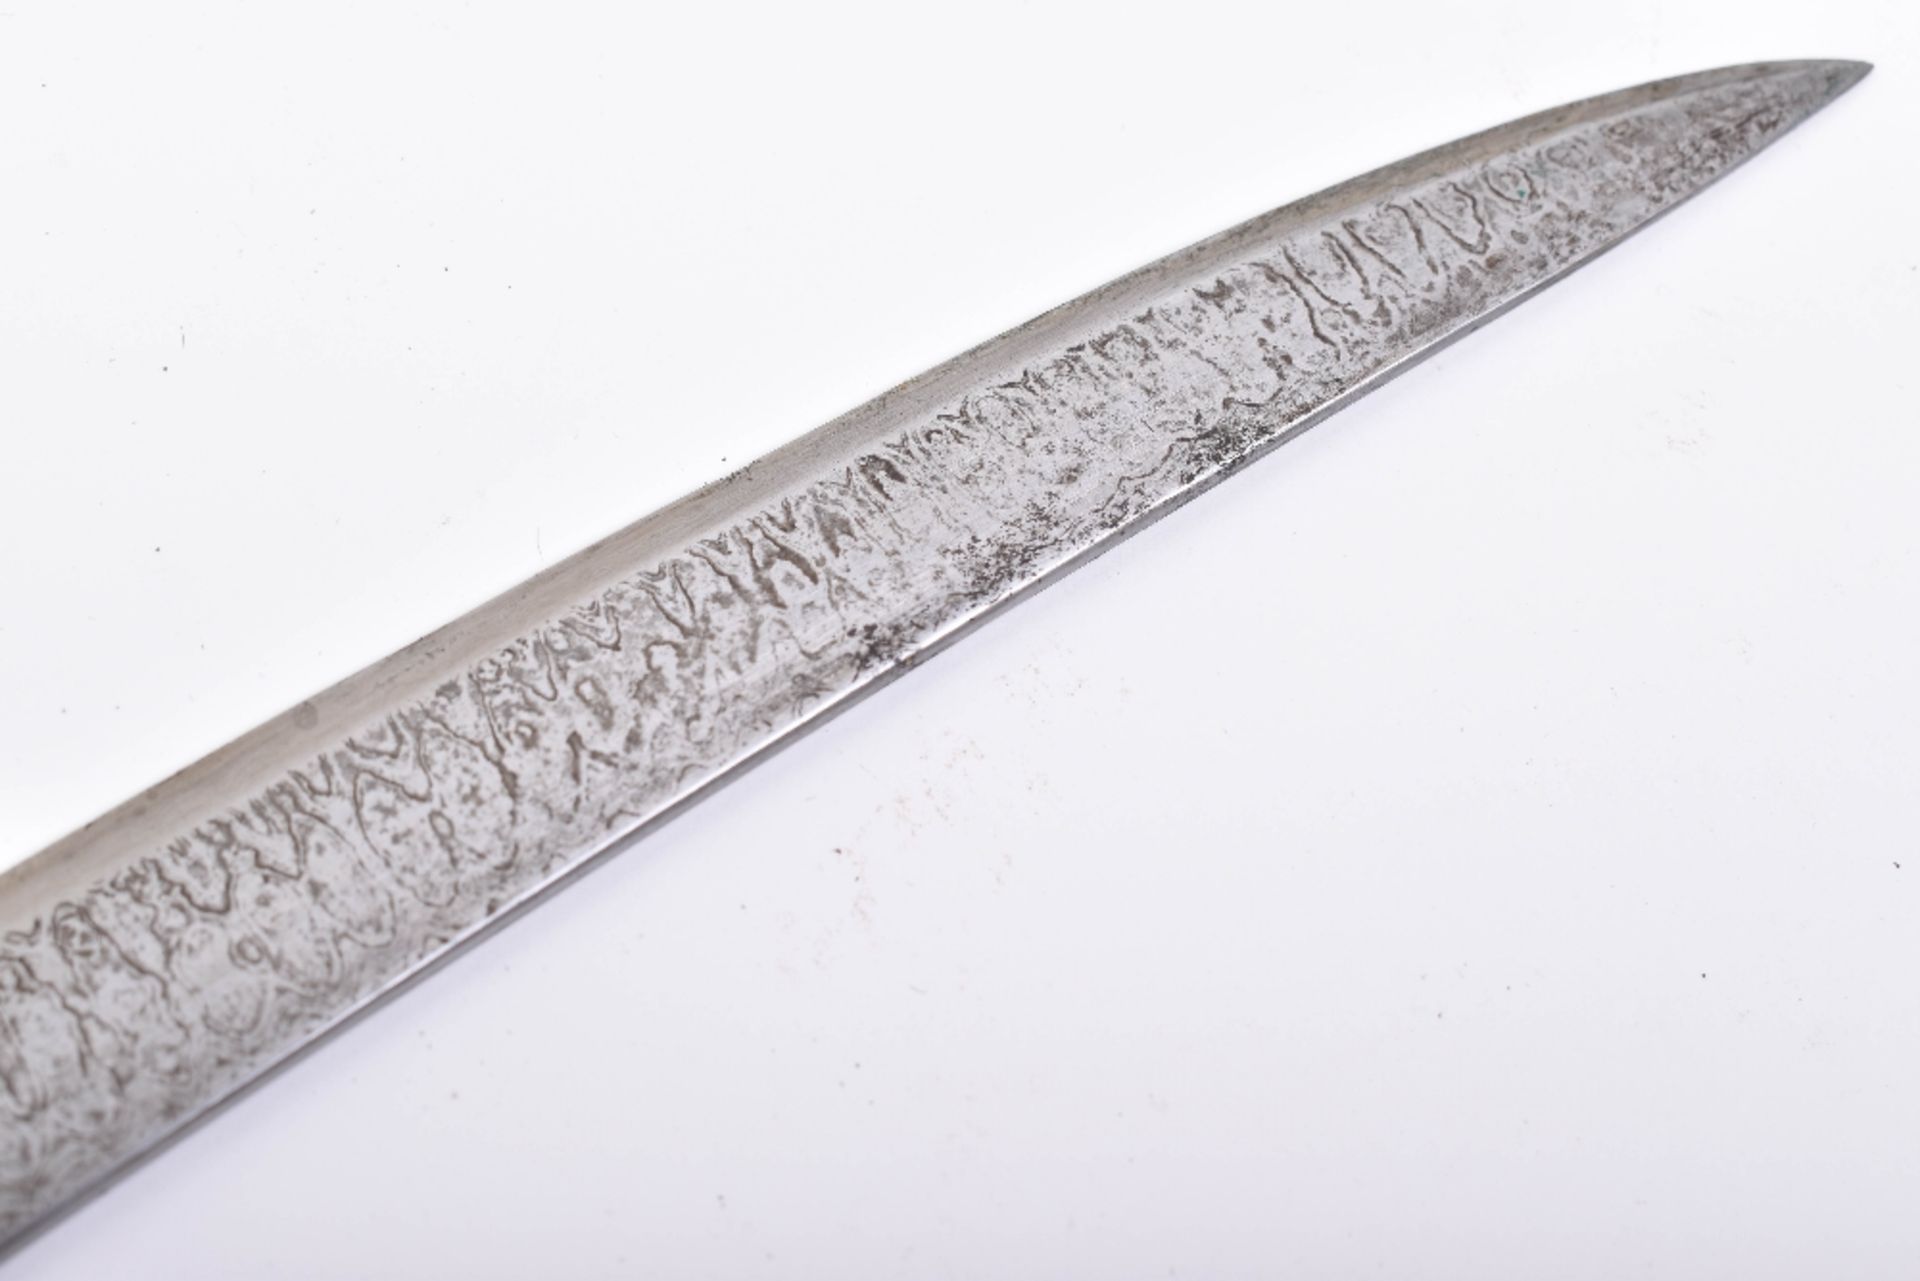 Good Indian Sword Shamshir from Kutch - Image 11 of 32